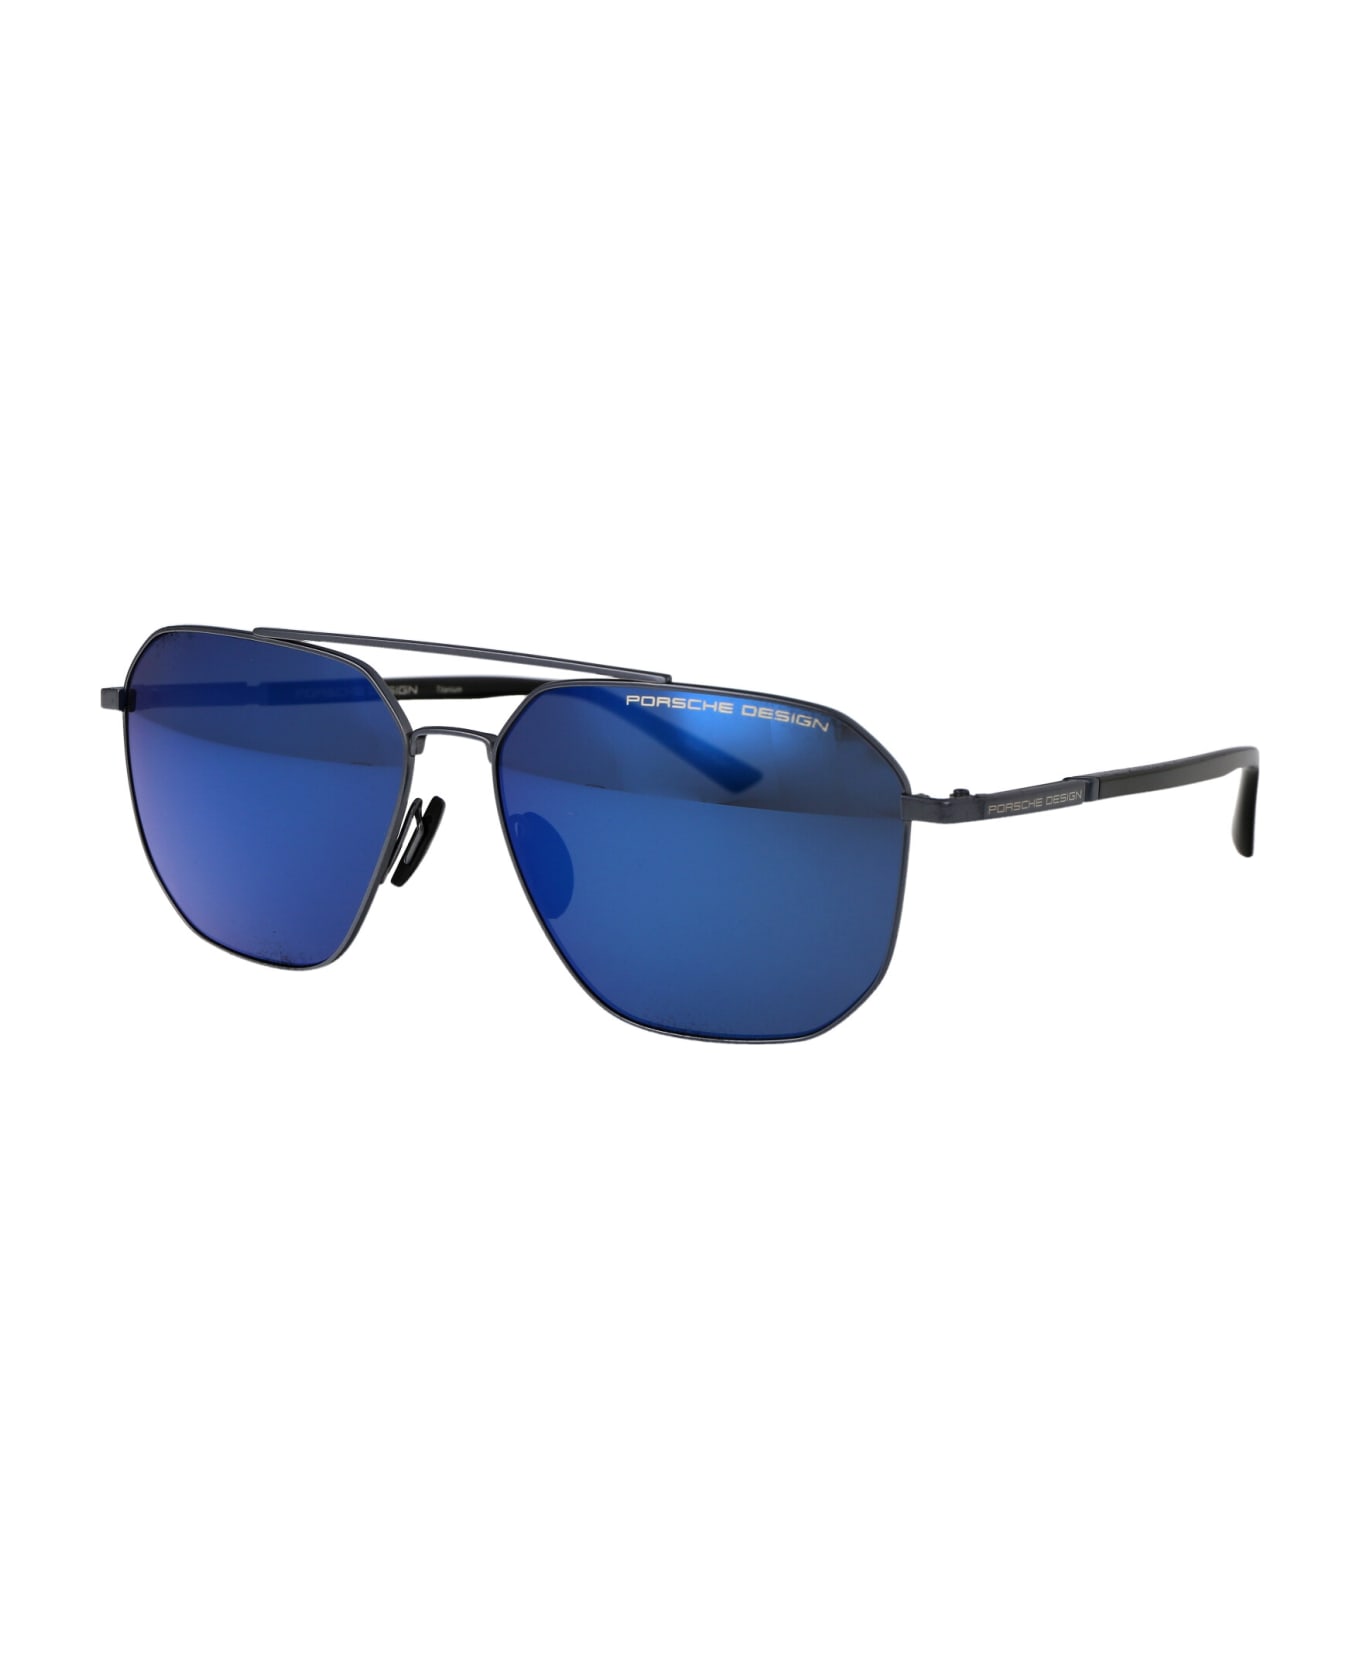 Porsche Design P8967 Sunglasses - D775 BLUE BLACK サングラス